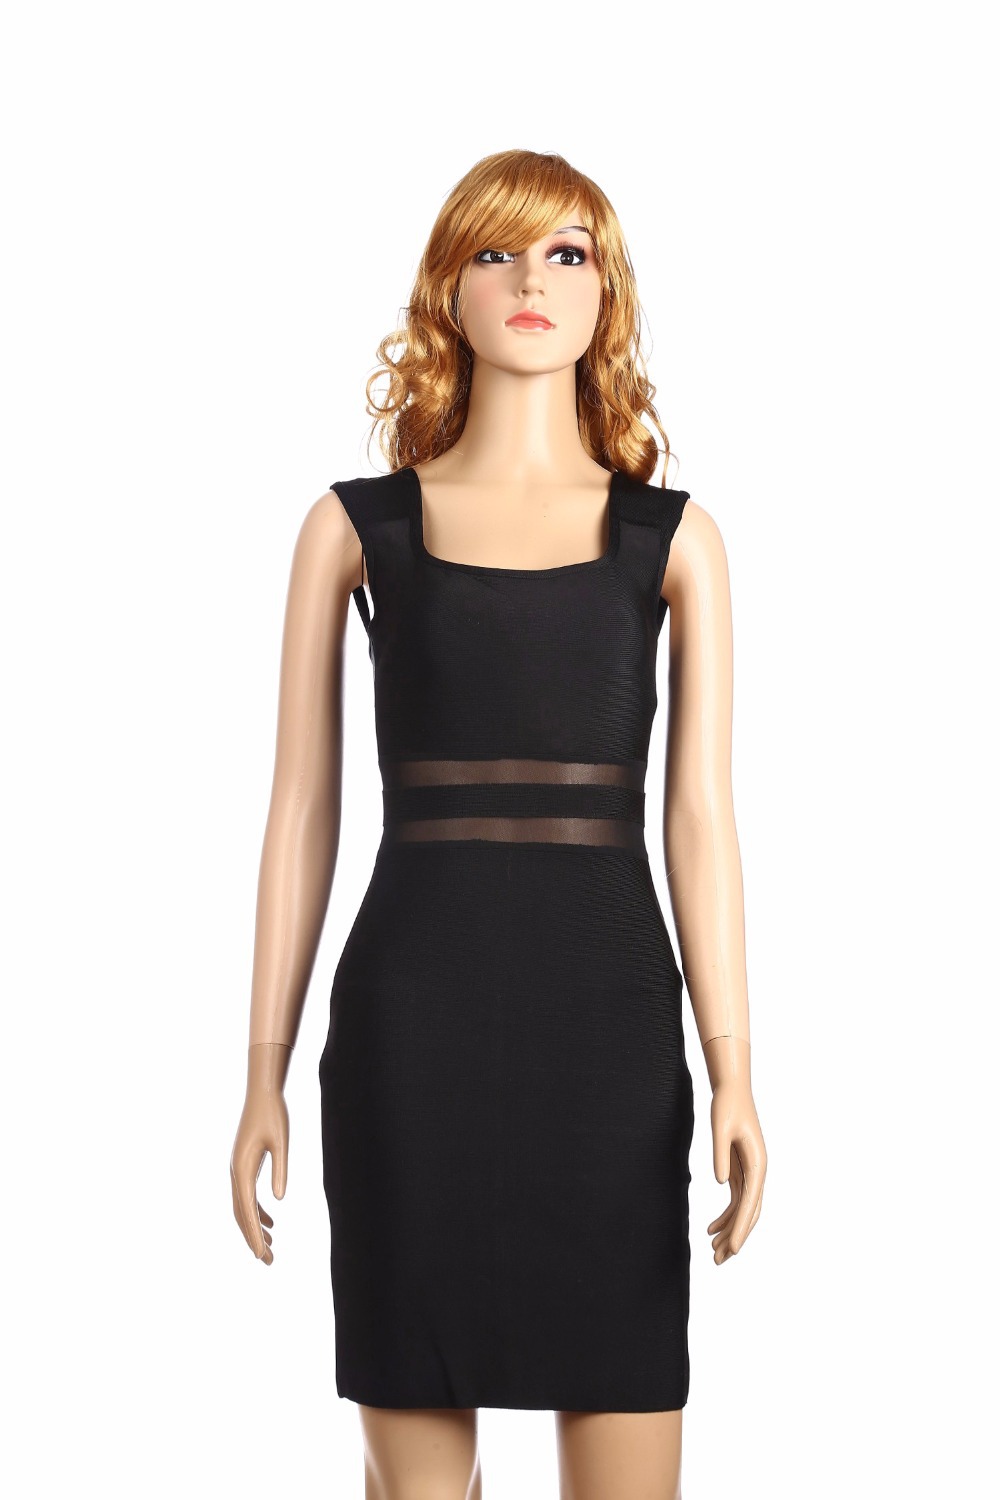 Hot-Sale-2015-New-Design-Women-s-Summer-Dress-Slim-Office-Dresses-Lady ...